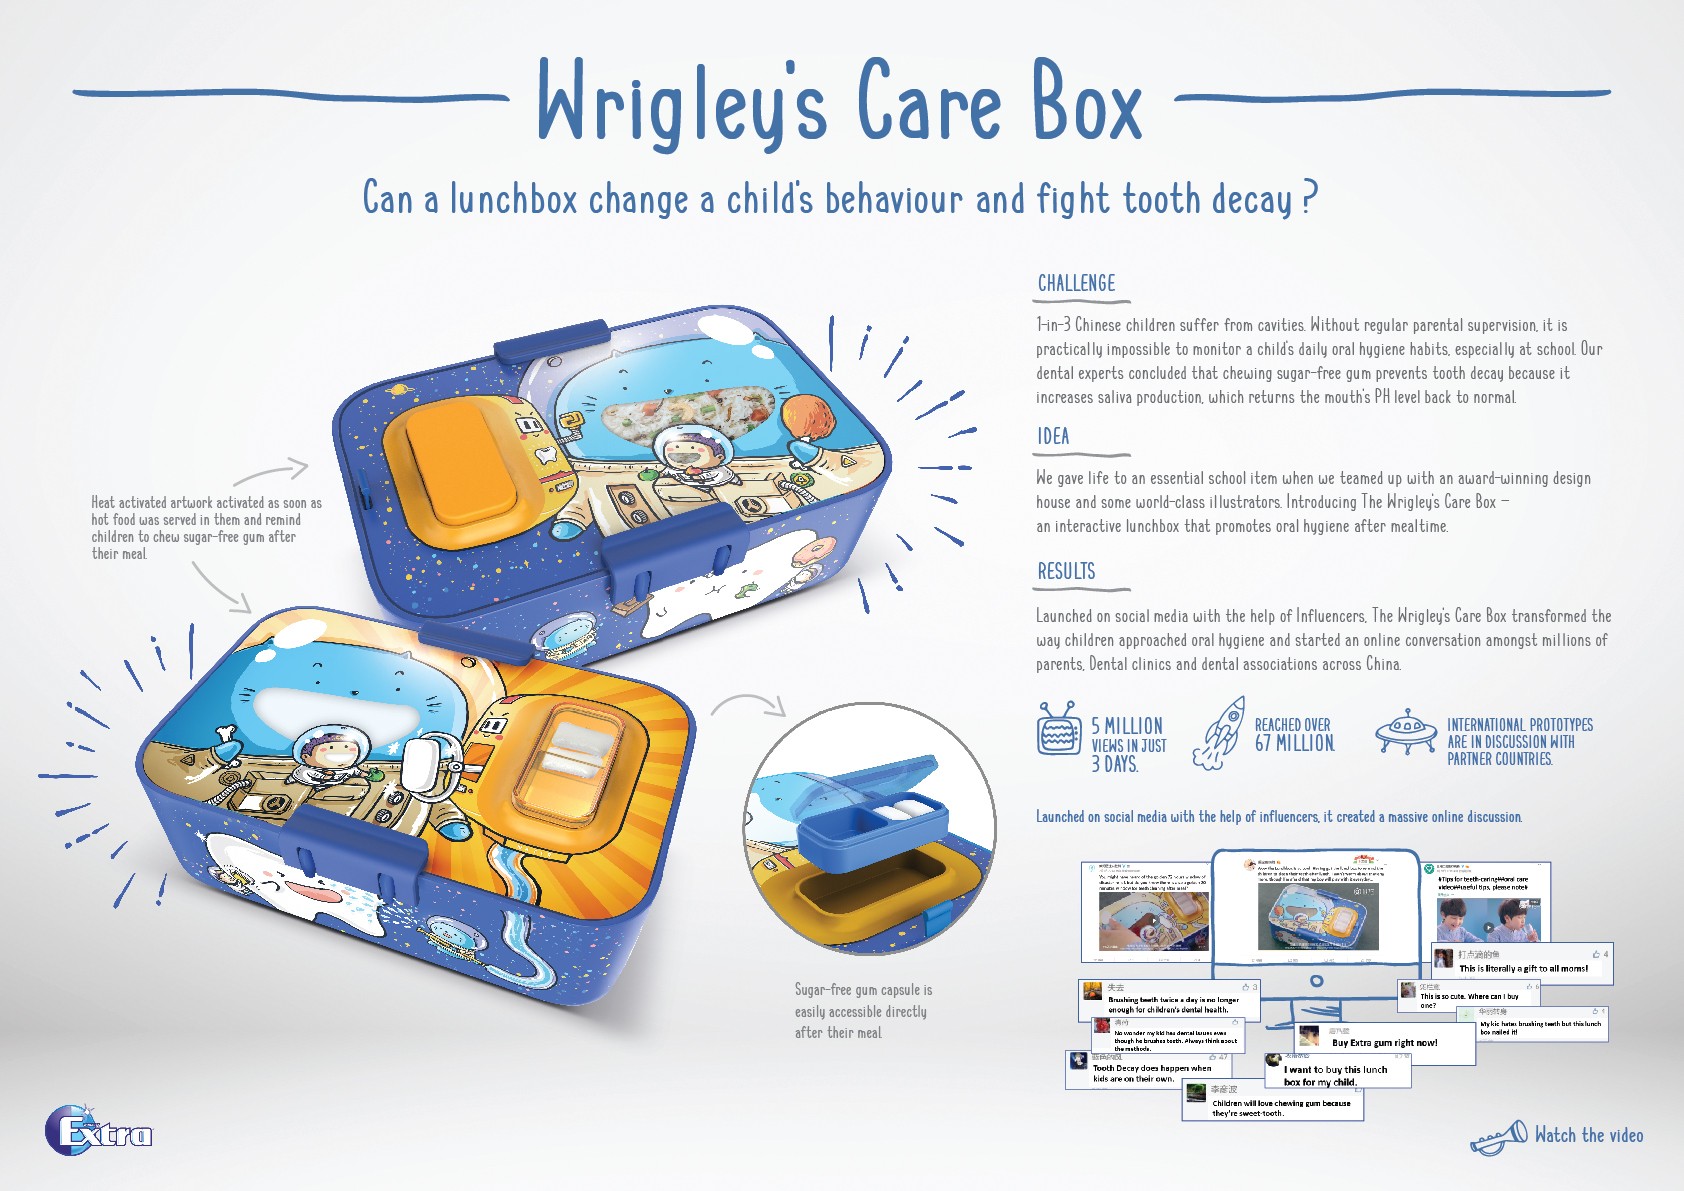 Wrigley’s Care Box